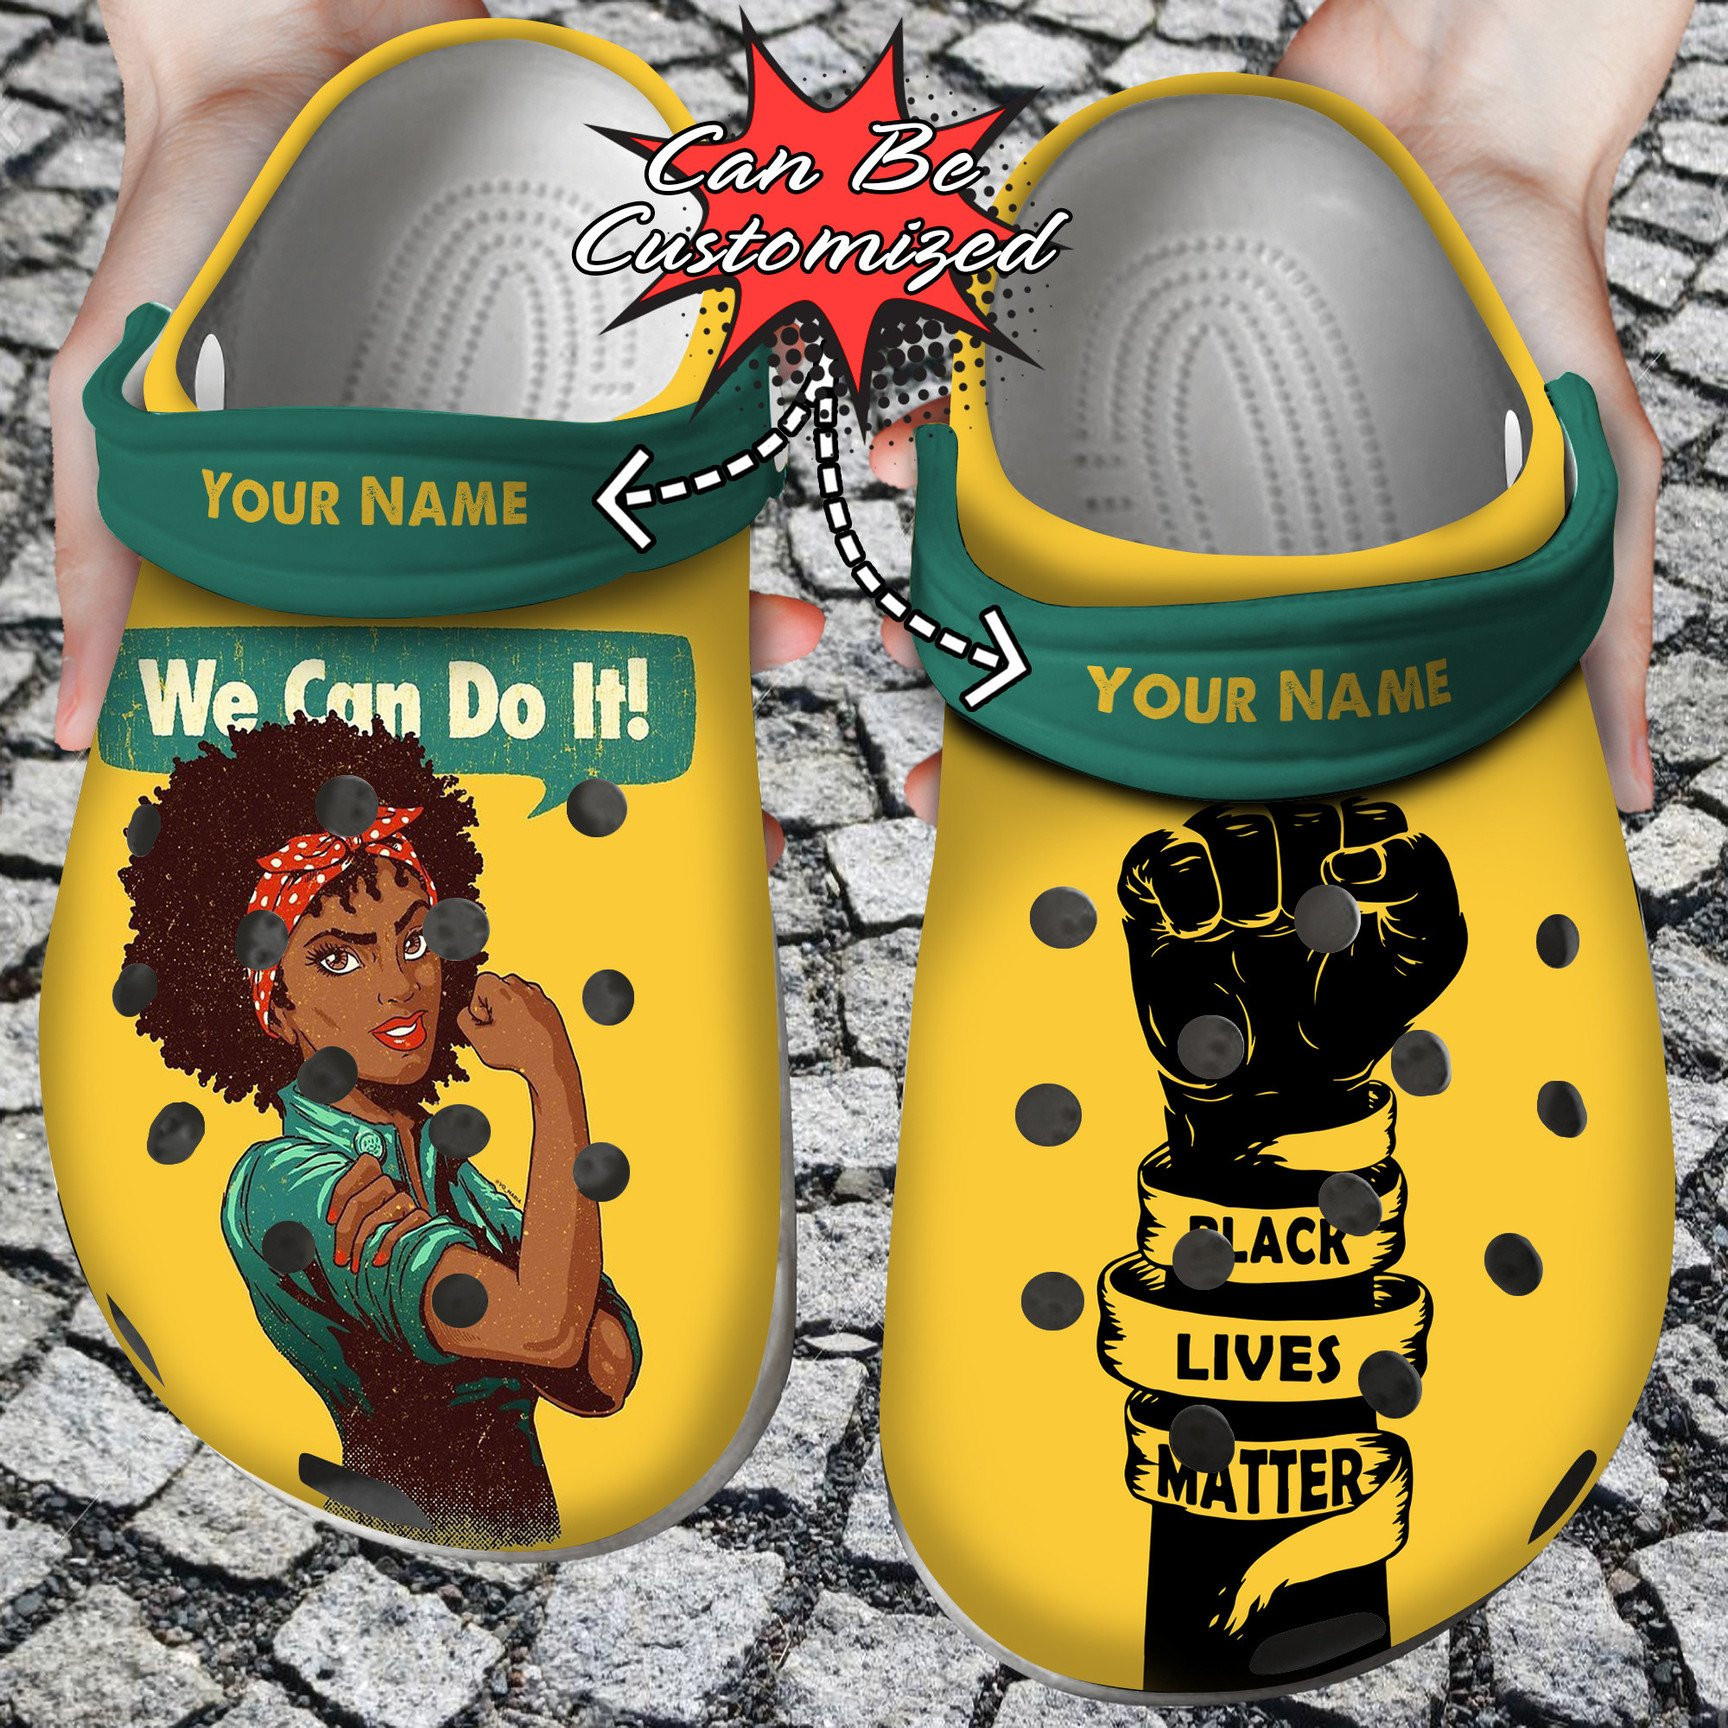 We Can Do It Black Women Personalized Black Live Matter Crocs Clog Shoes Custom Crocs